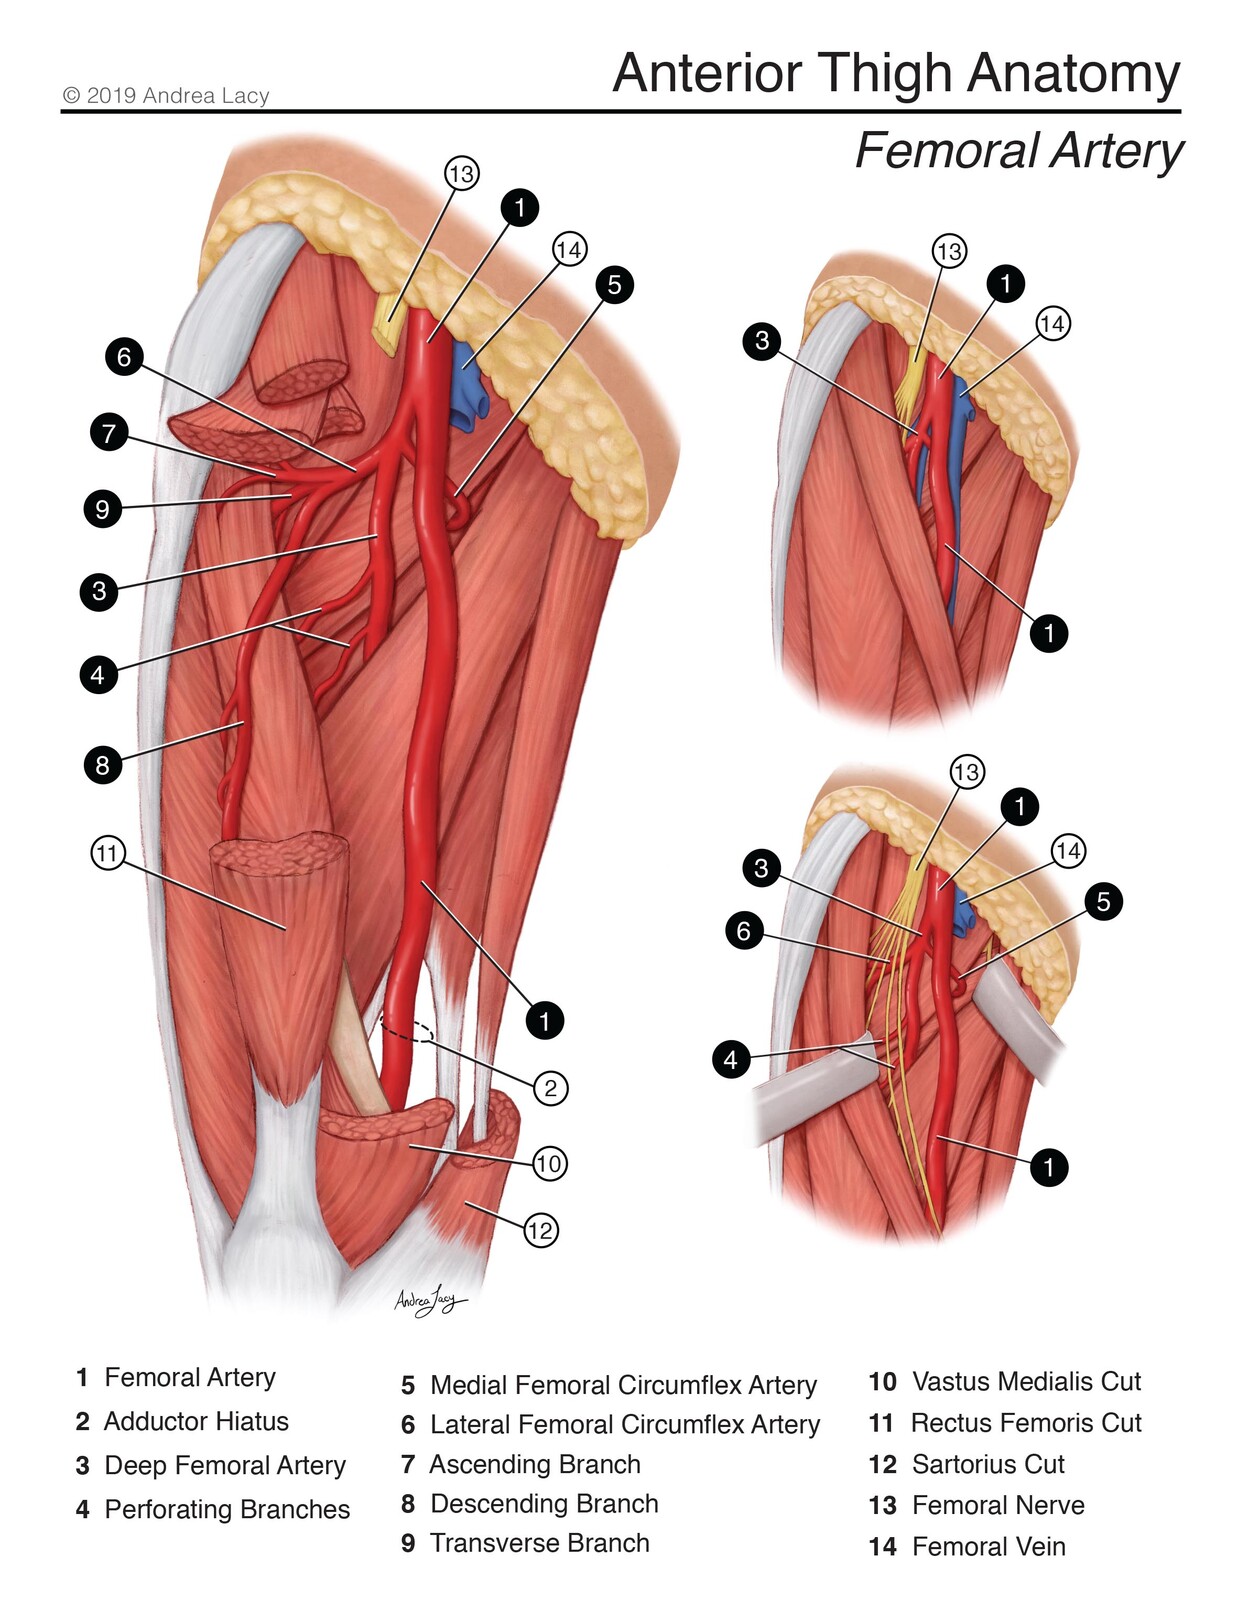 Anterior Thigh Anatomy-Femoral Artery